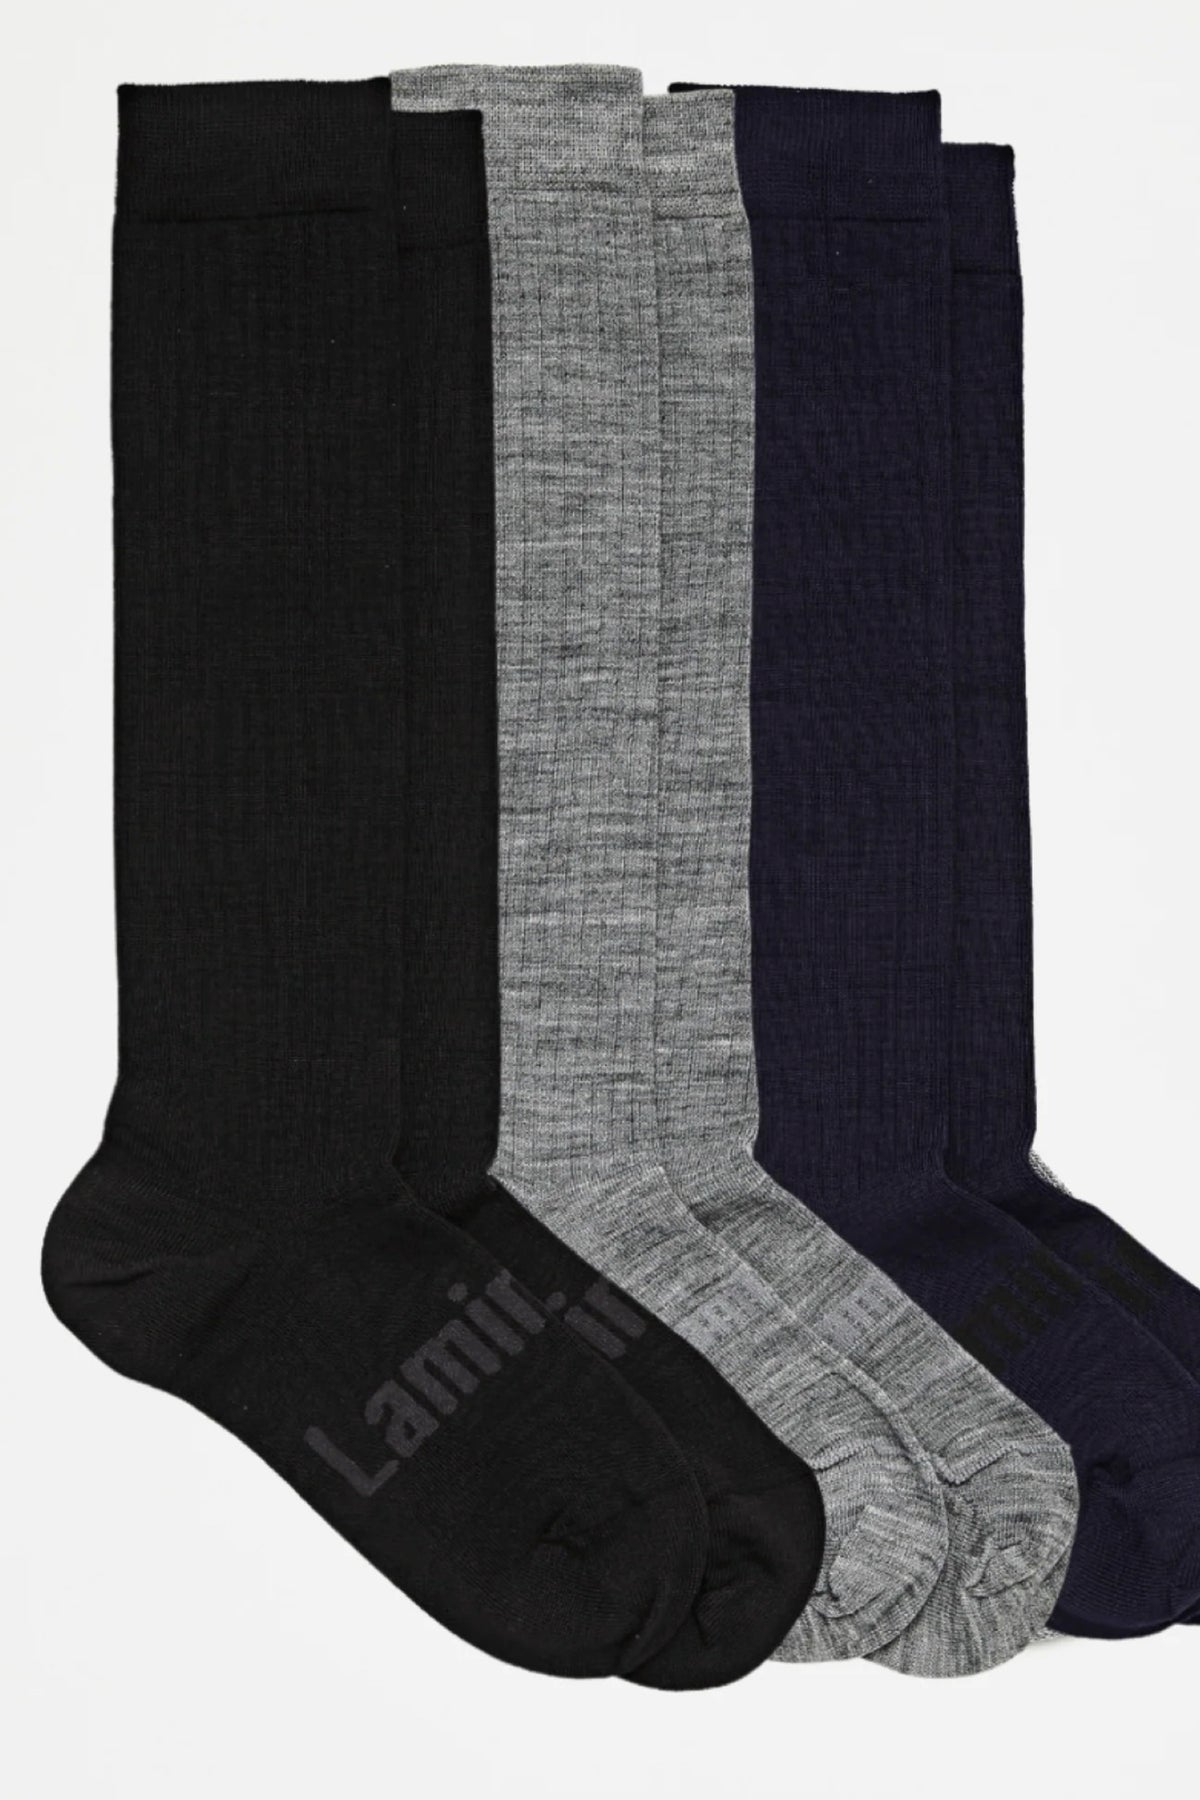 Merino Wool Plain Knee High Socks Black